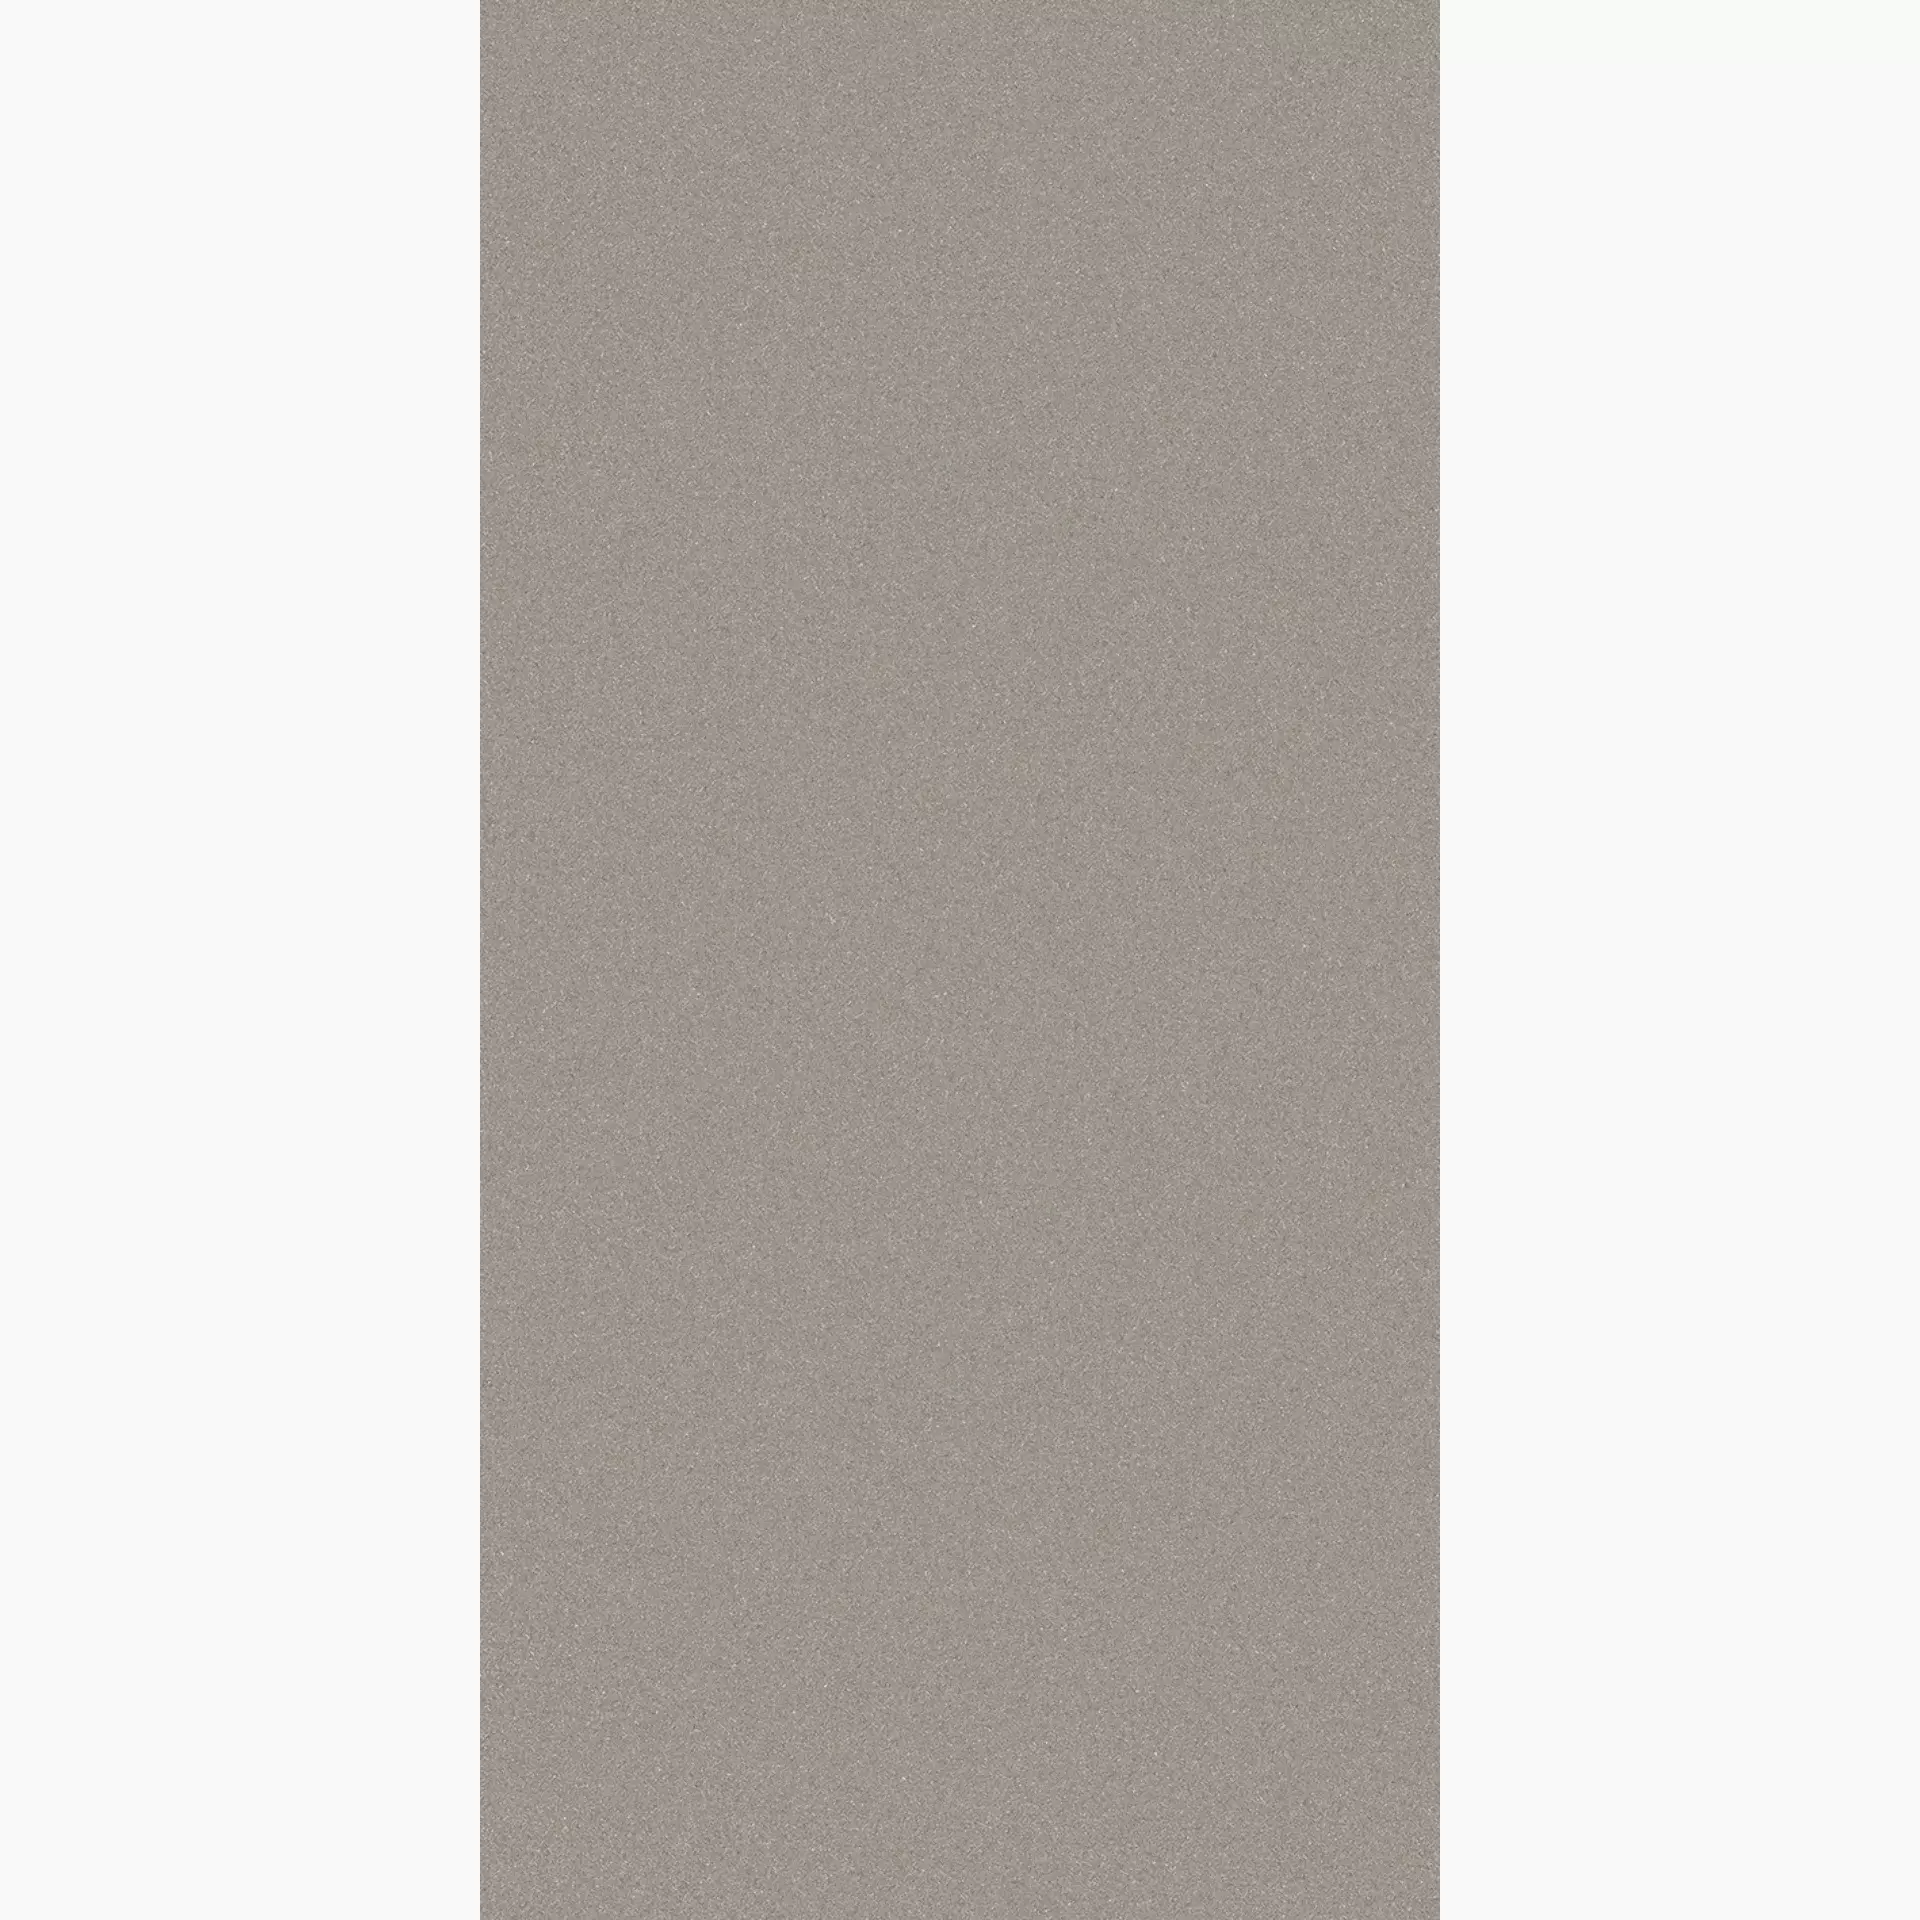 Villeroy & Boch Pure Line 2.0 Cement Grey Matt 2751-UL61 60x120cm rectified 12mm